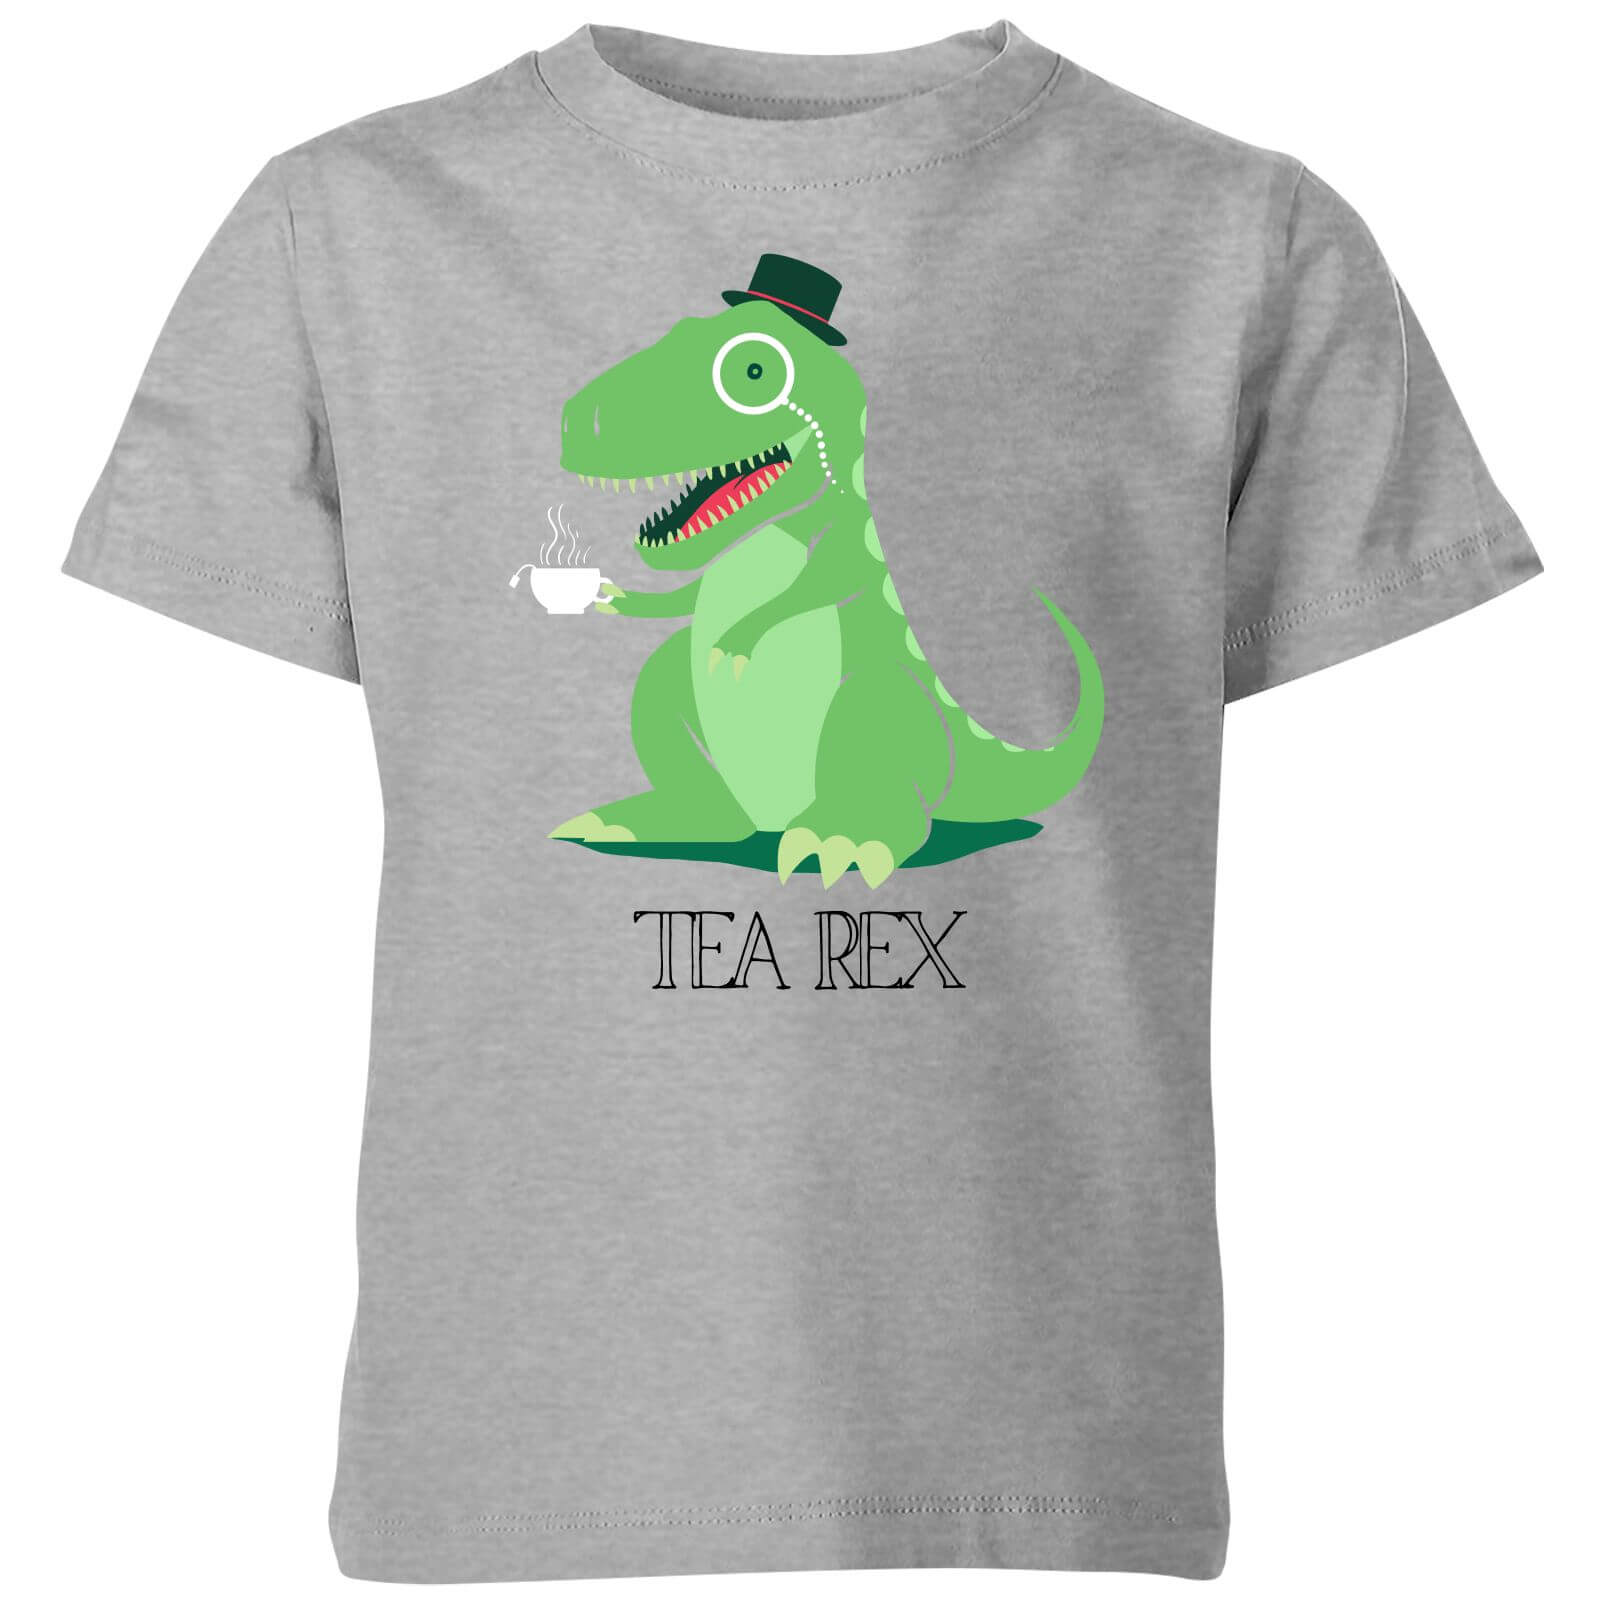 Tea Rex Kids' T-Shirt - Grey - 3-4 Years - Grey